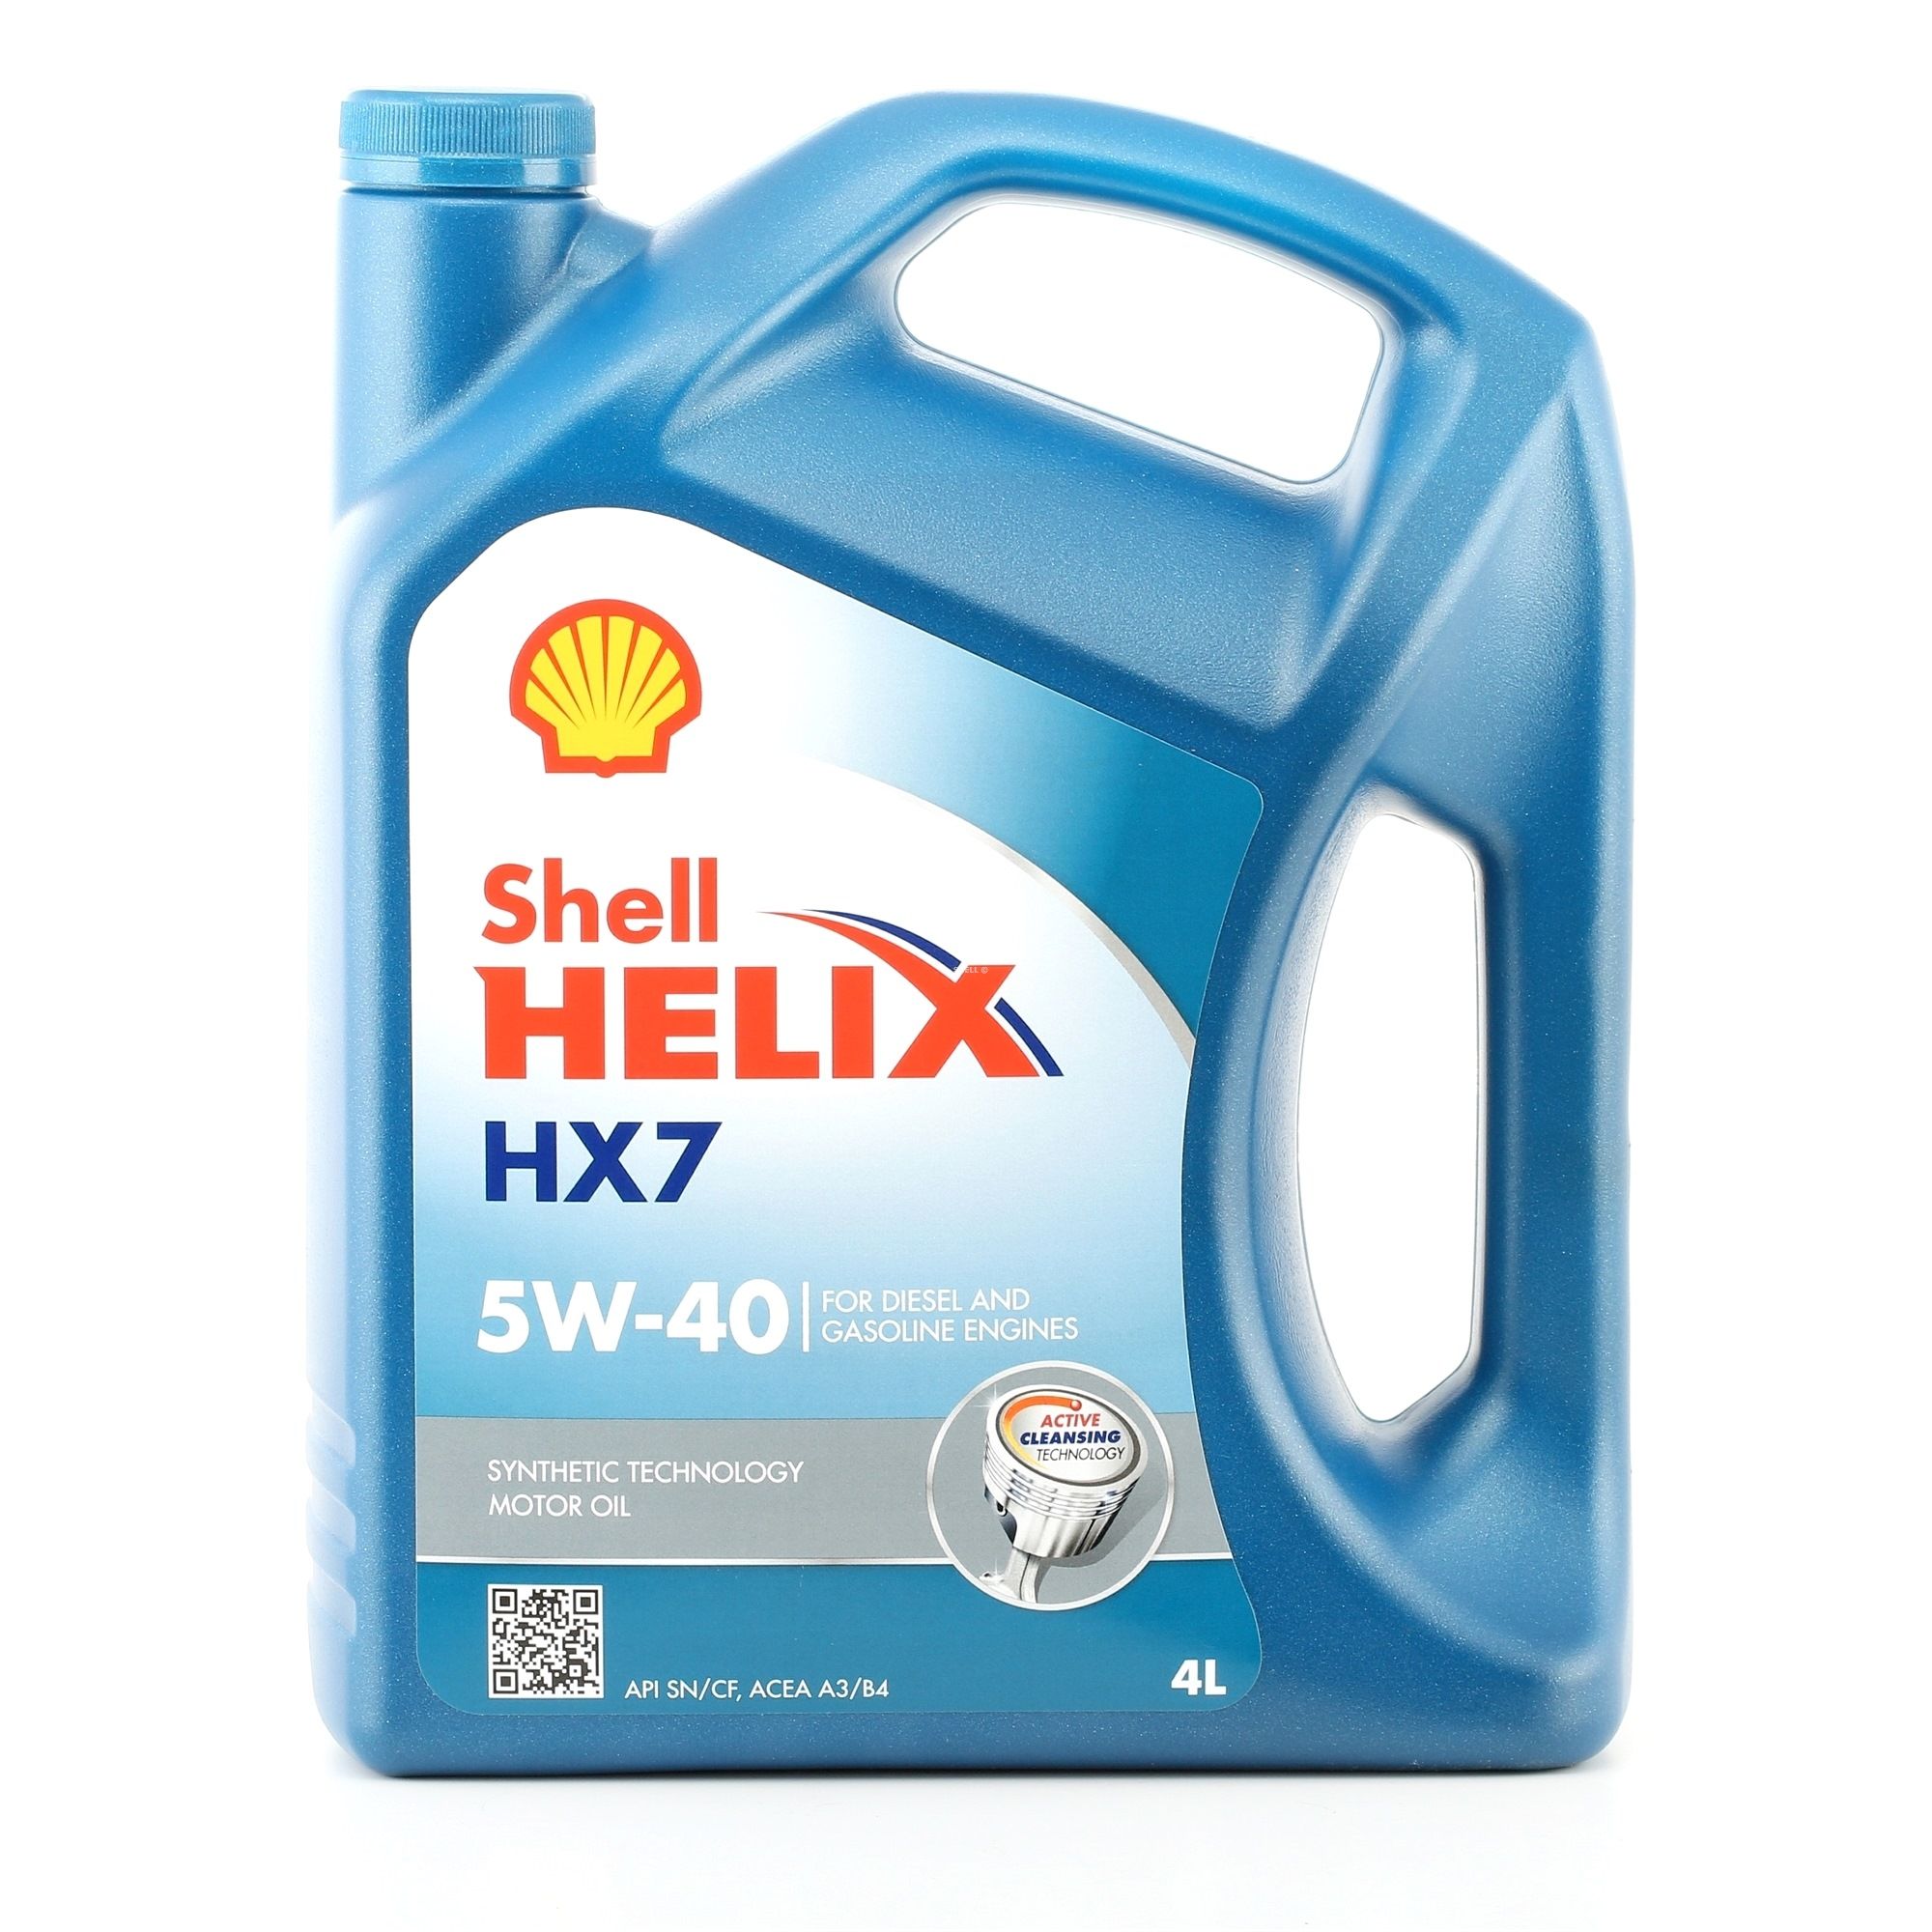 Kaufen Sie Motoröl SHELL 550046284 Helix, HX7 5W-40, 4l